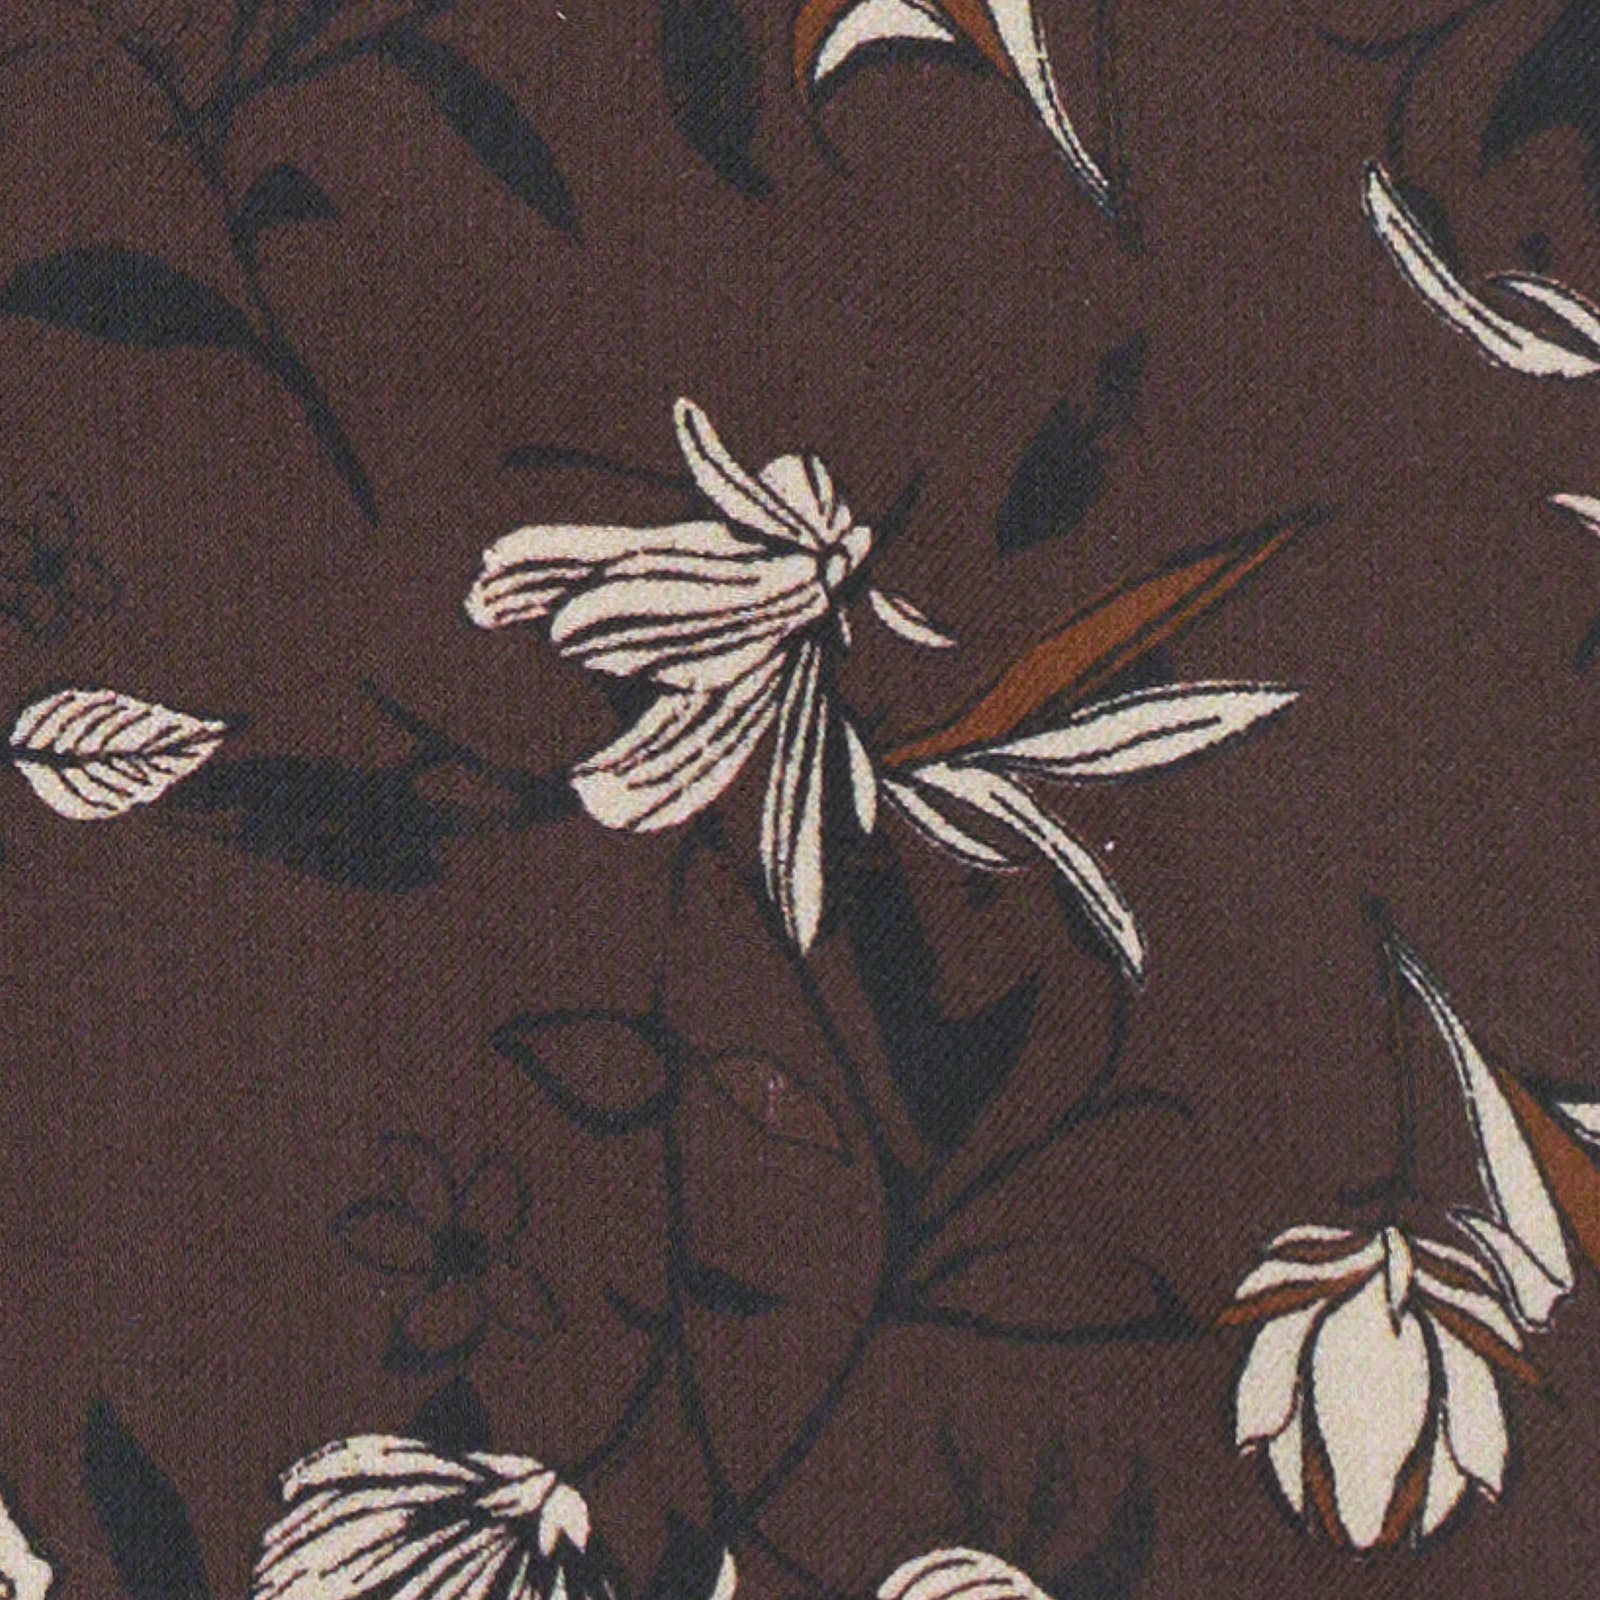 VINCENZO DI RUGGIERO Handmade Brown Floral Cotton Shirt EU 40 NEW US 15.75